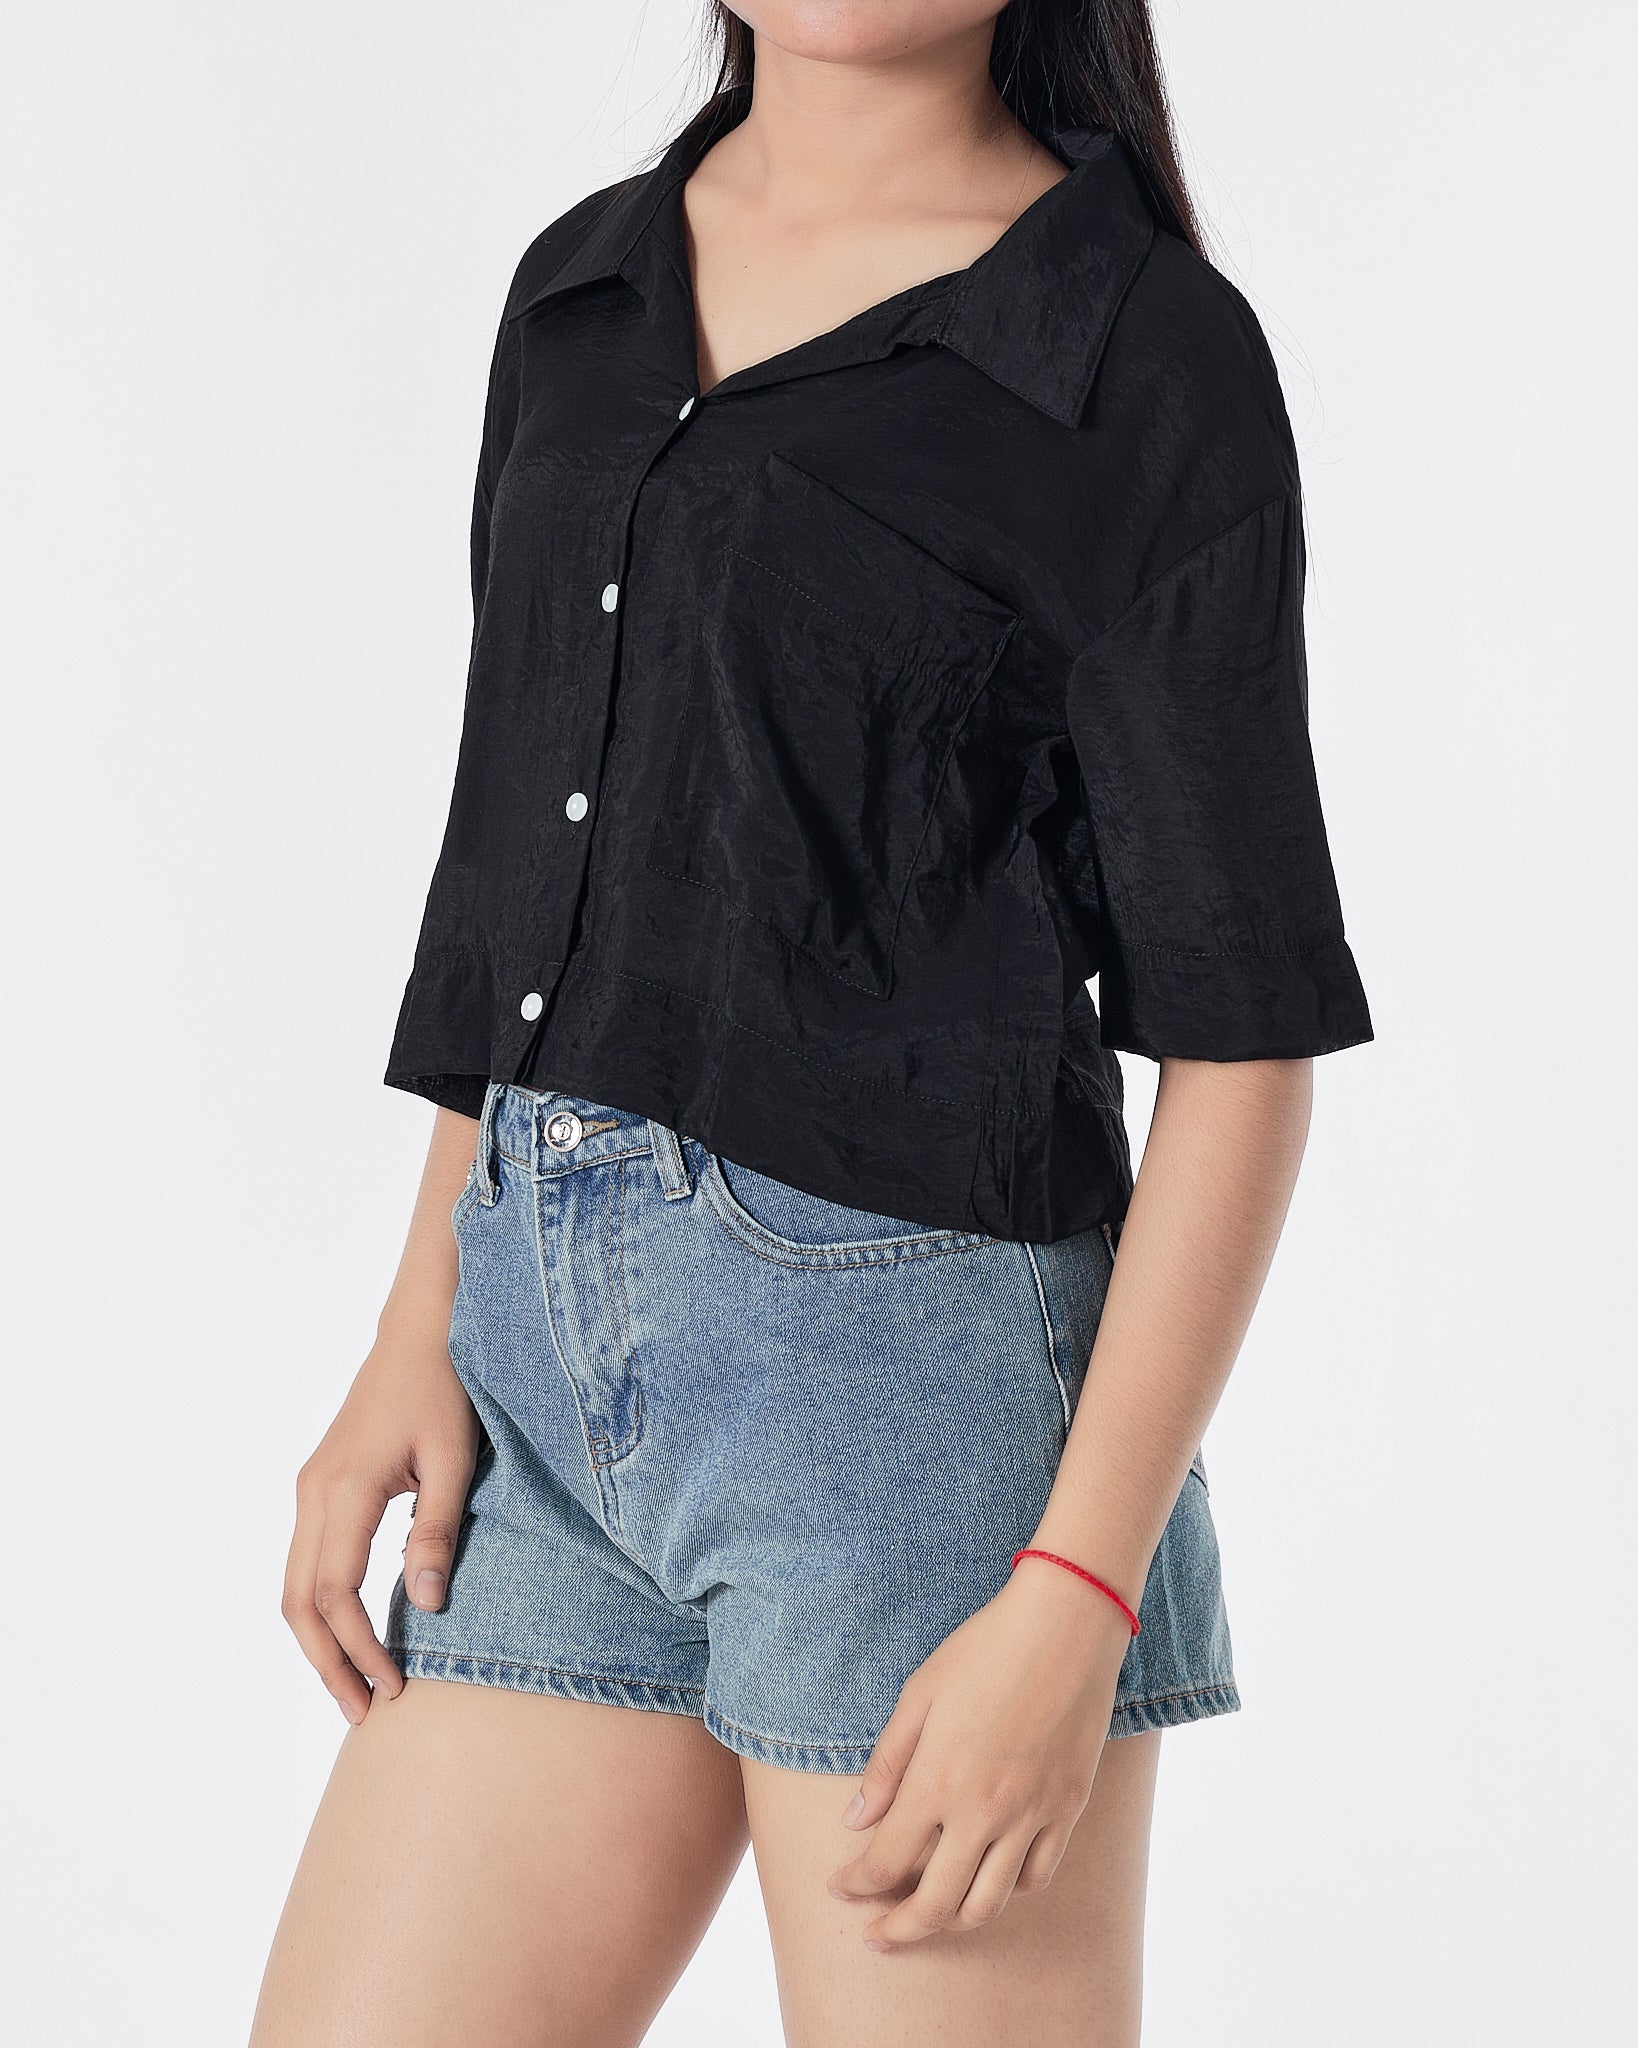 Plain Color Black Lady Shirts Short Sleeve 12.90